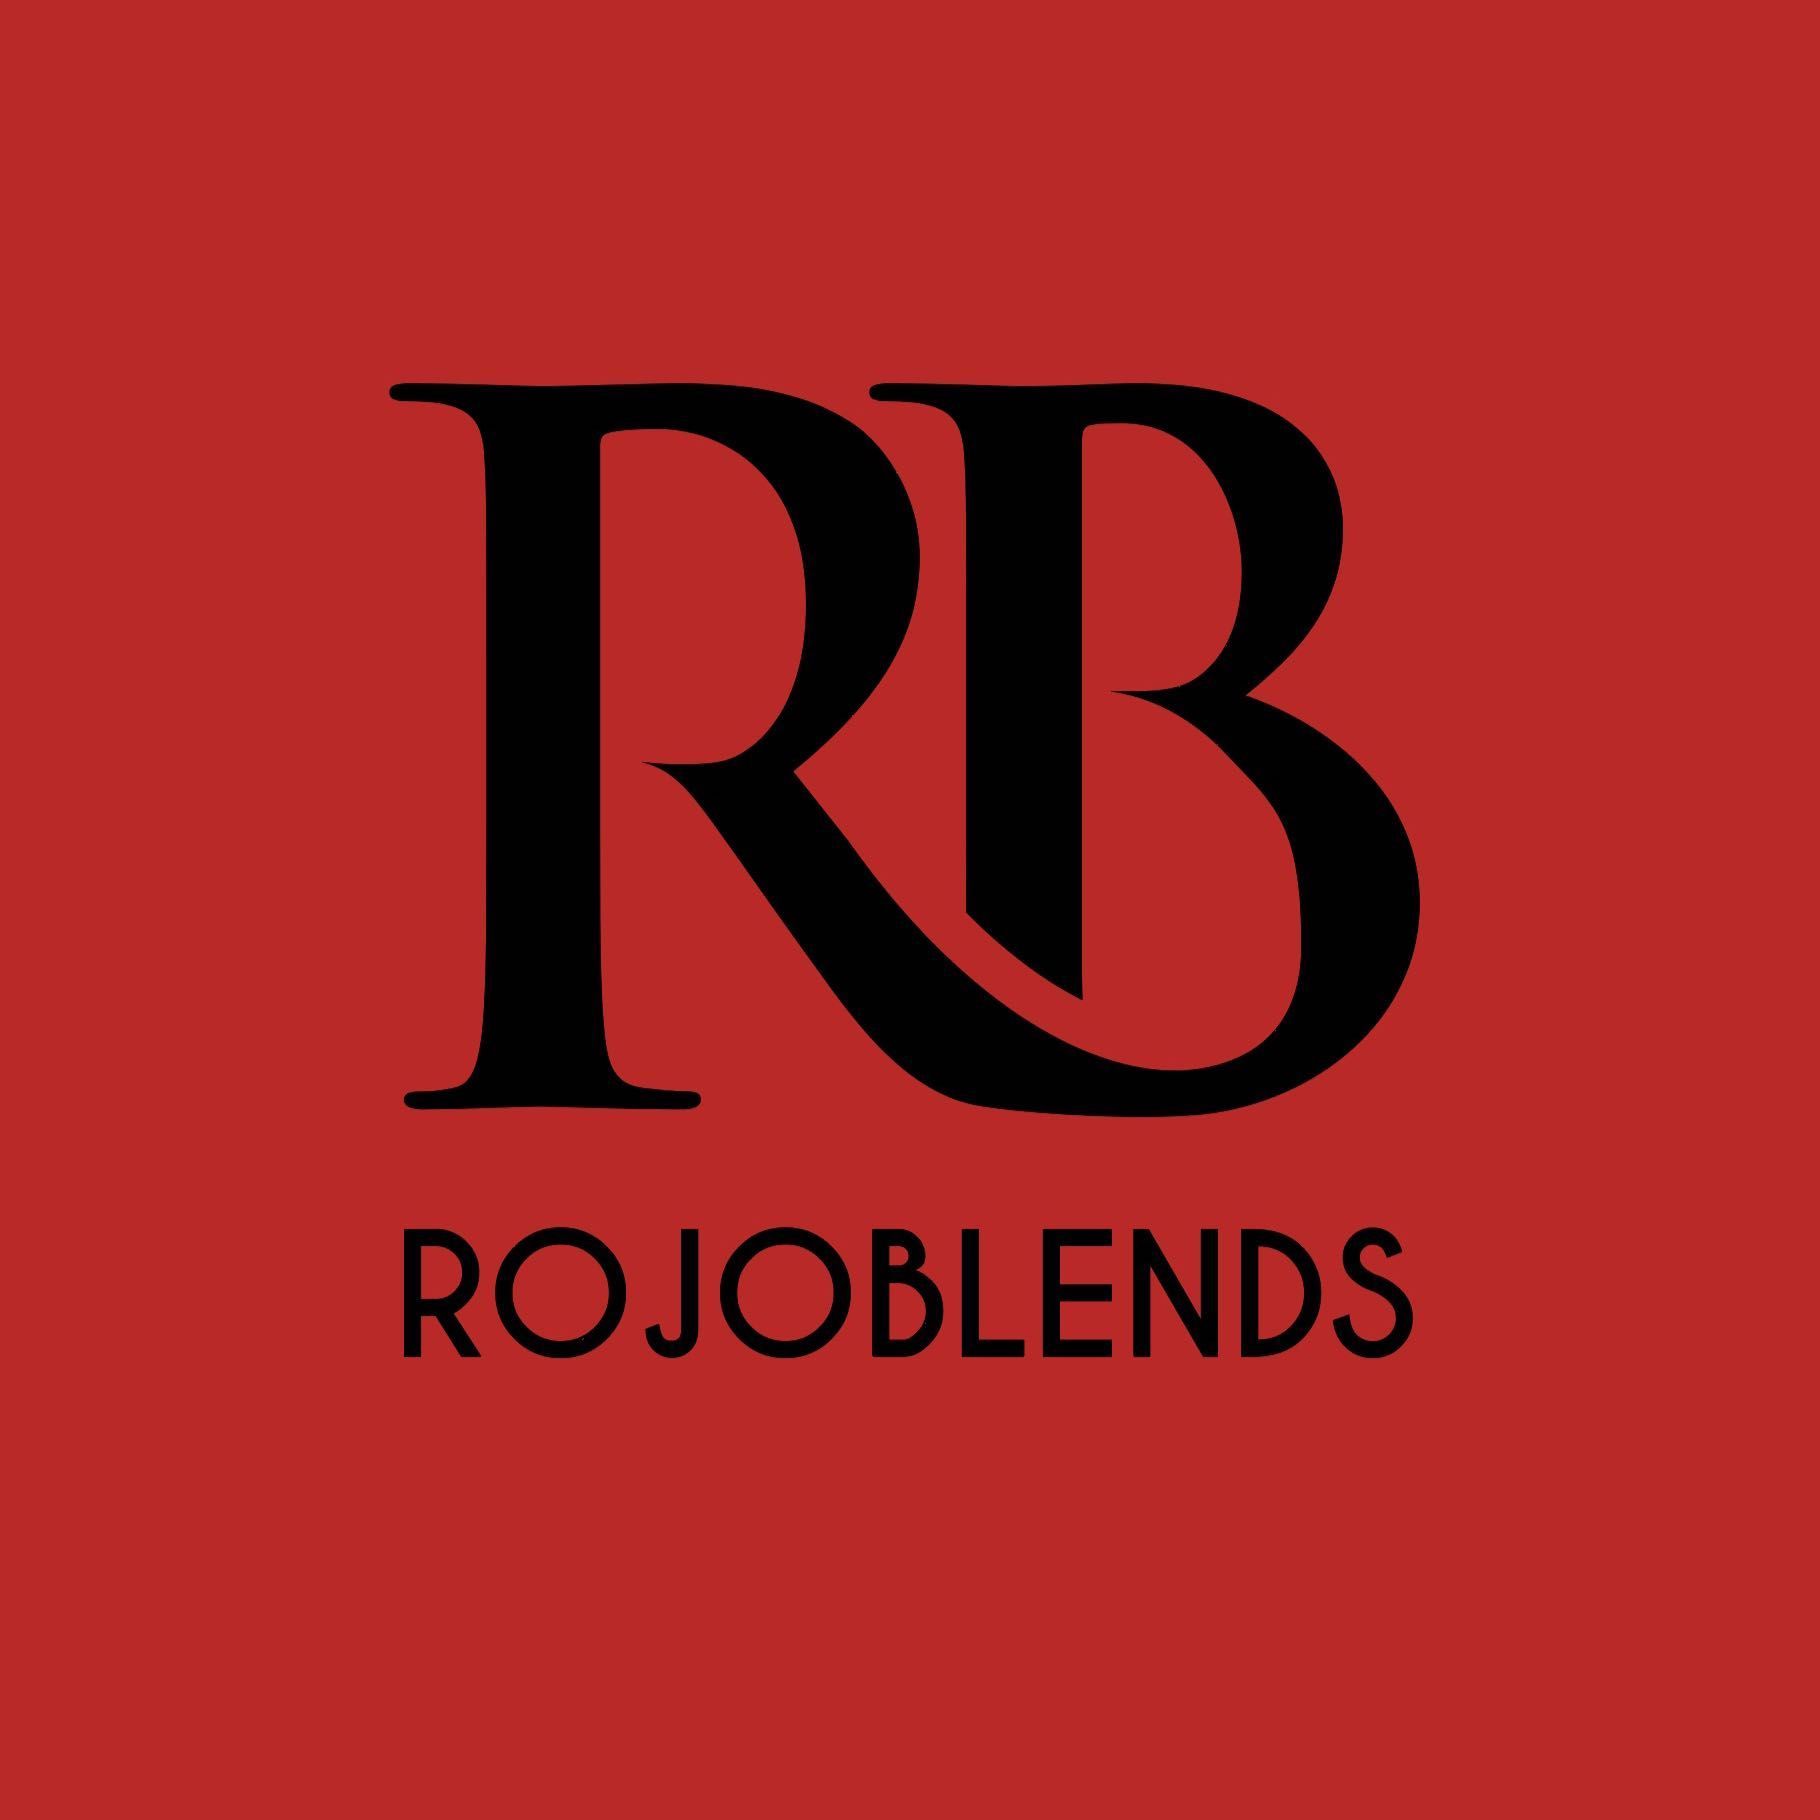 Rojoblends, 15355 sherman way, Unit t, Van Nuys, Van Nuys 91406